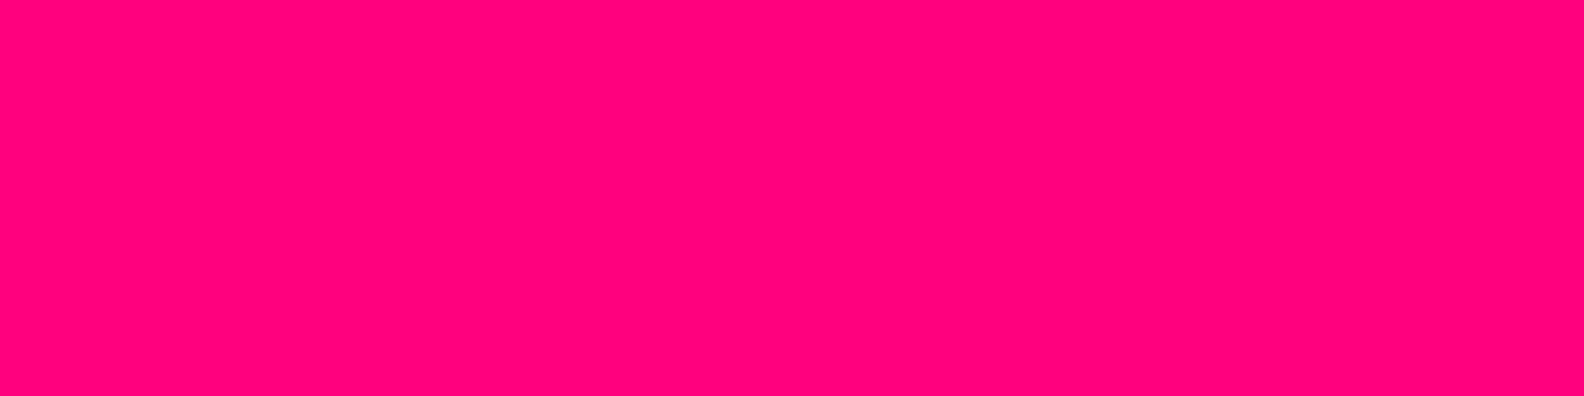 1584x396 Rose Solid Color Background